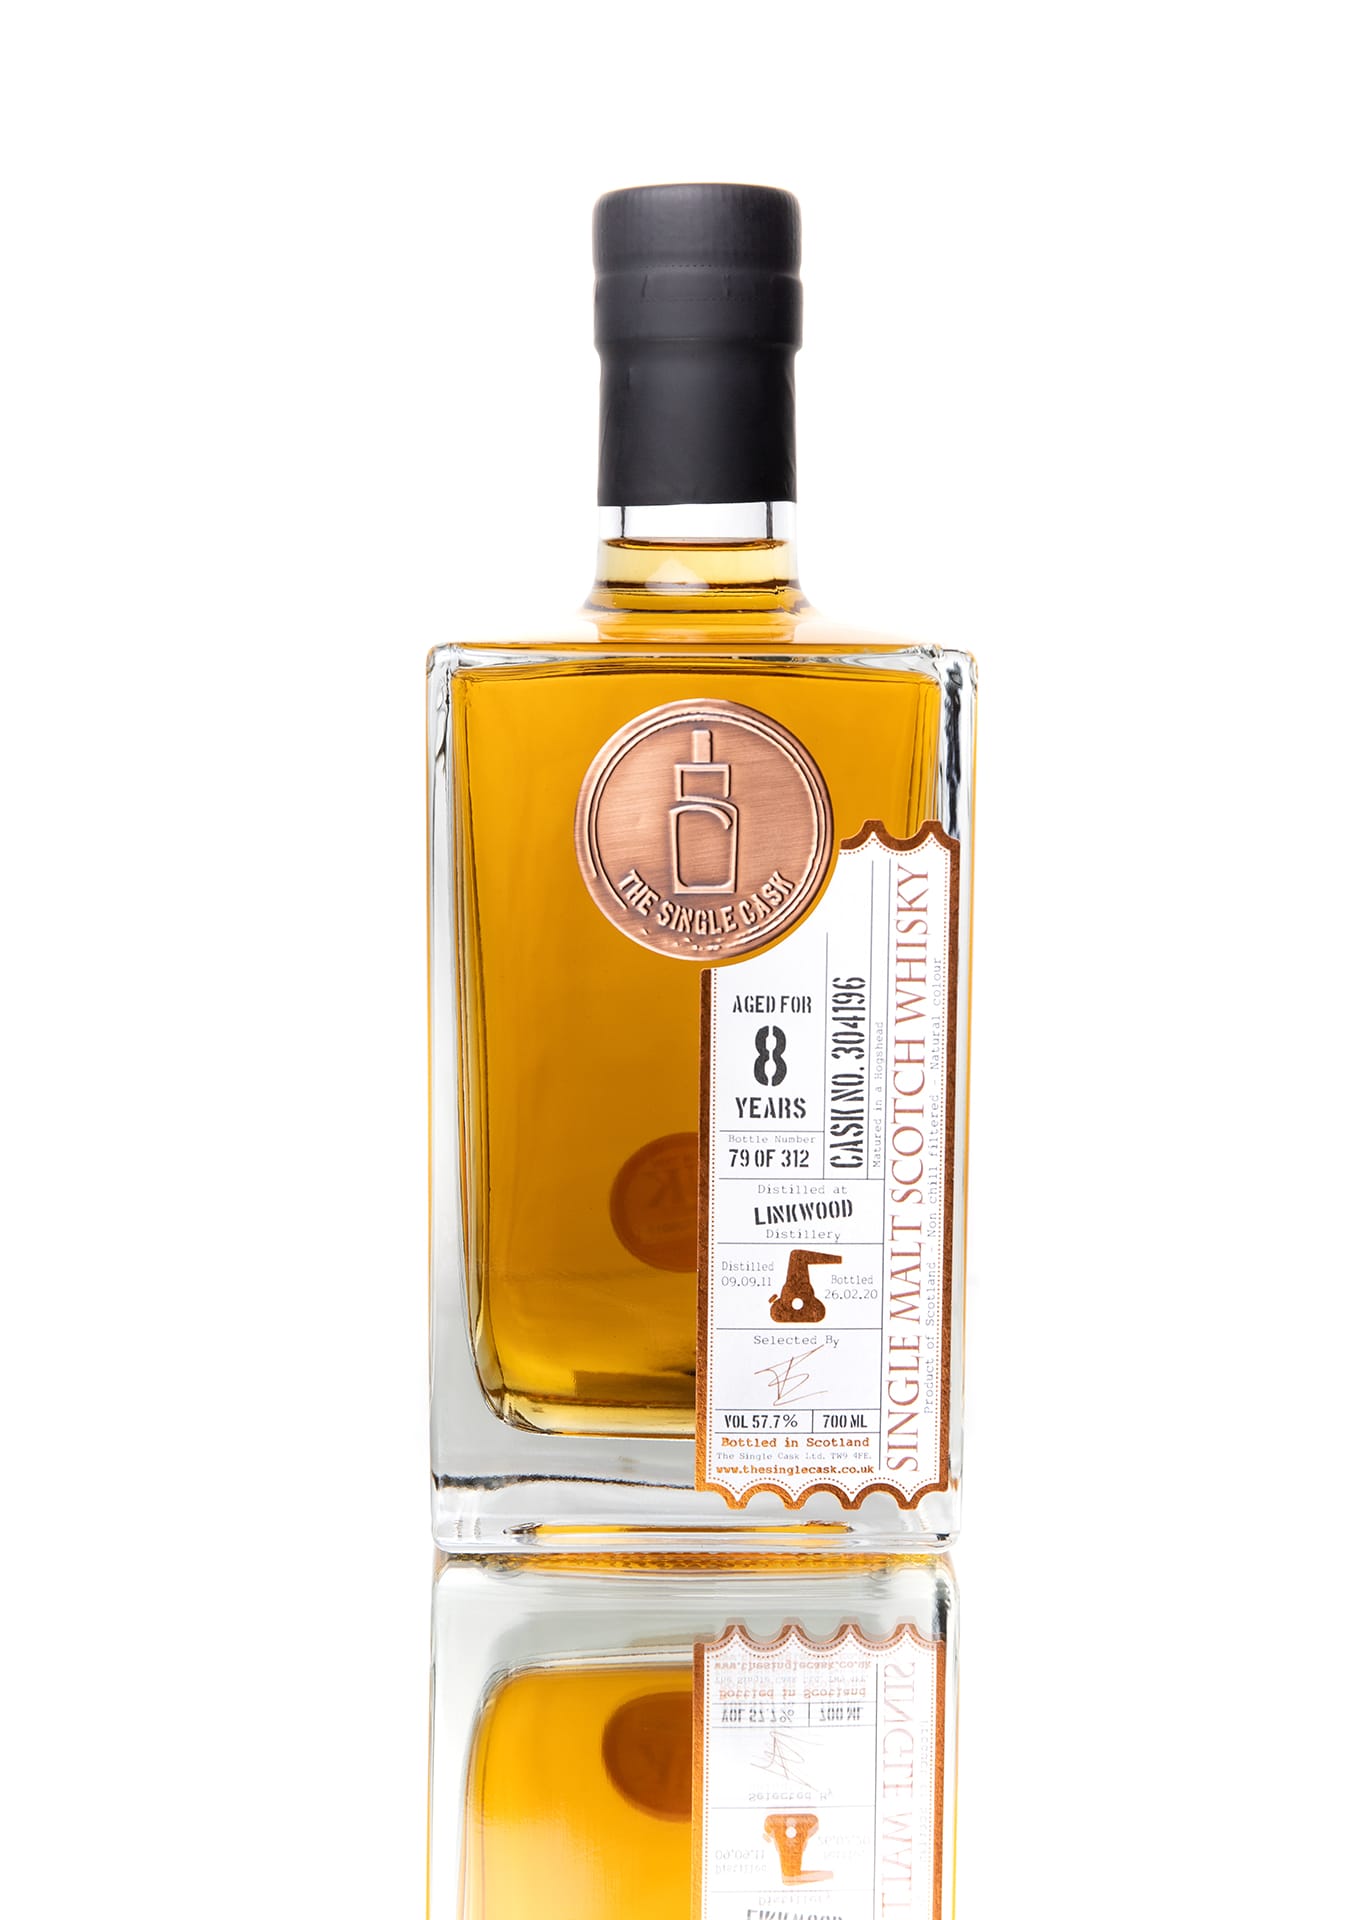 The Single Cask Linkwood 8 Year Single Malt Scotch Whisky